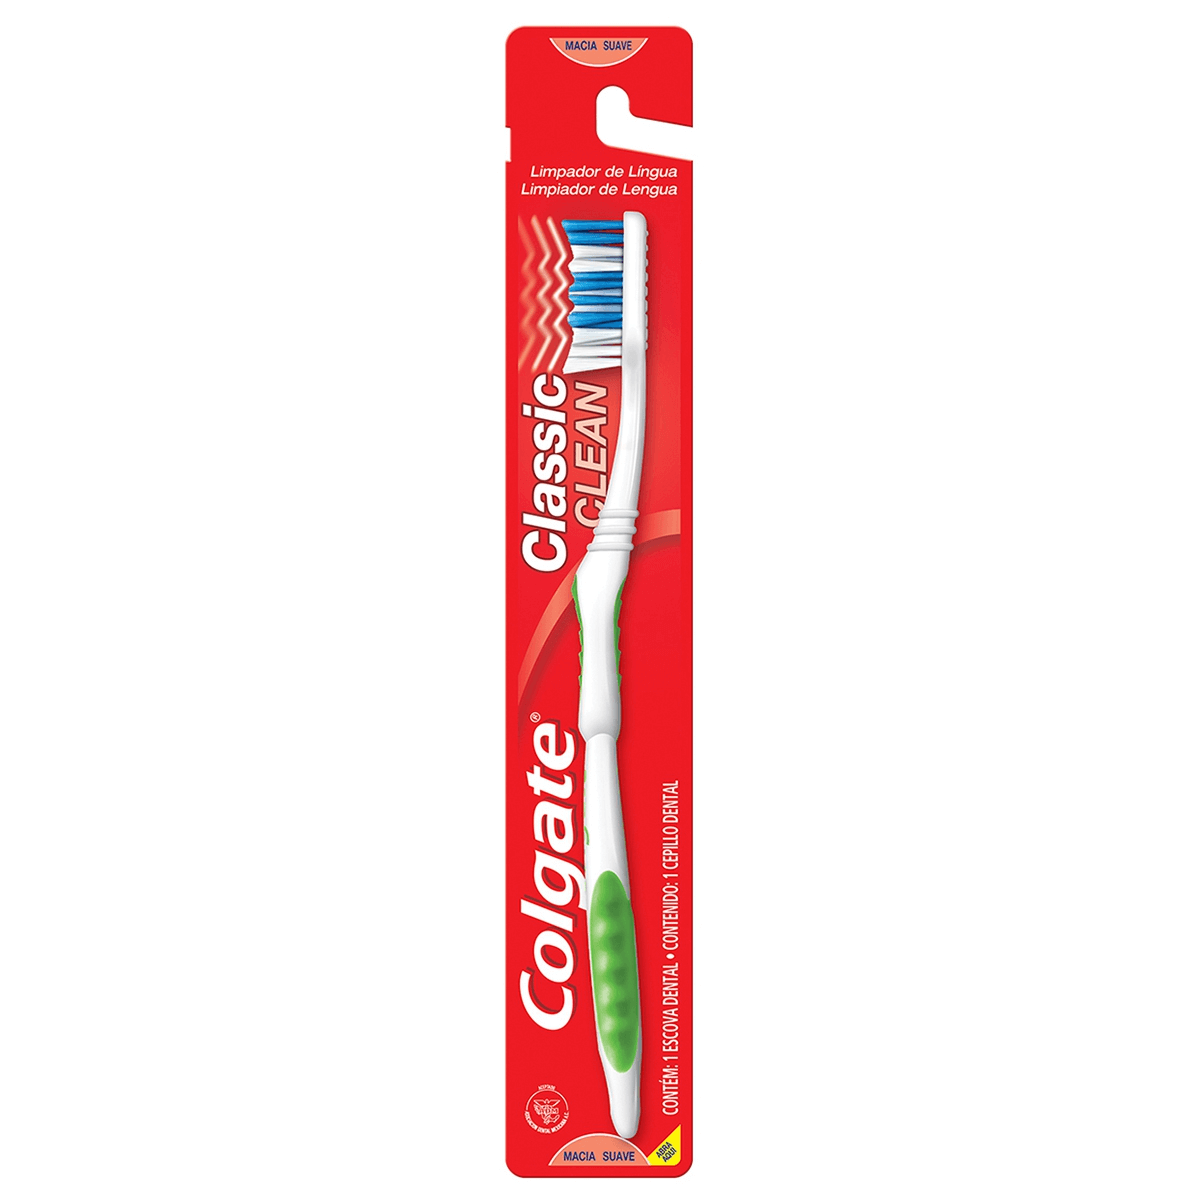 Escova Dental Colgate Classic Clean 1 Unidade